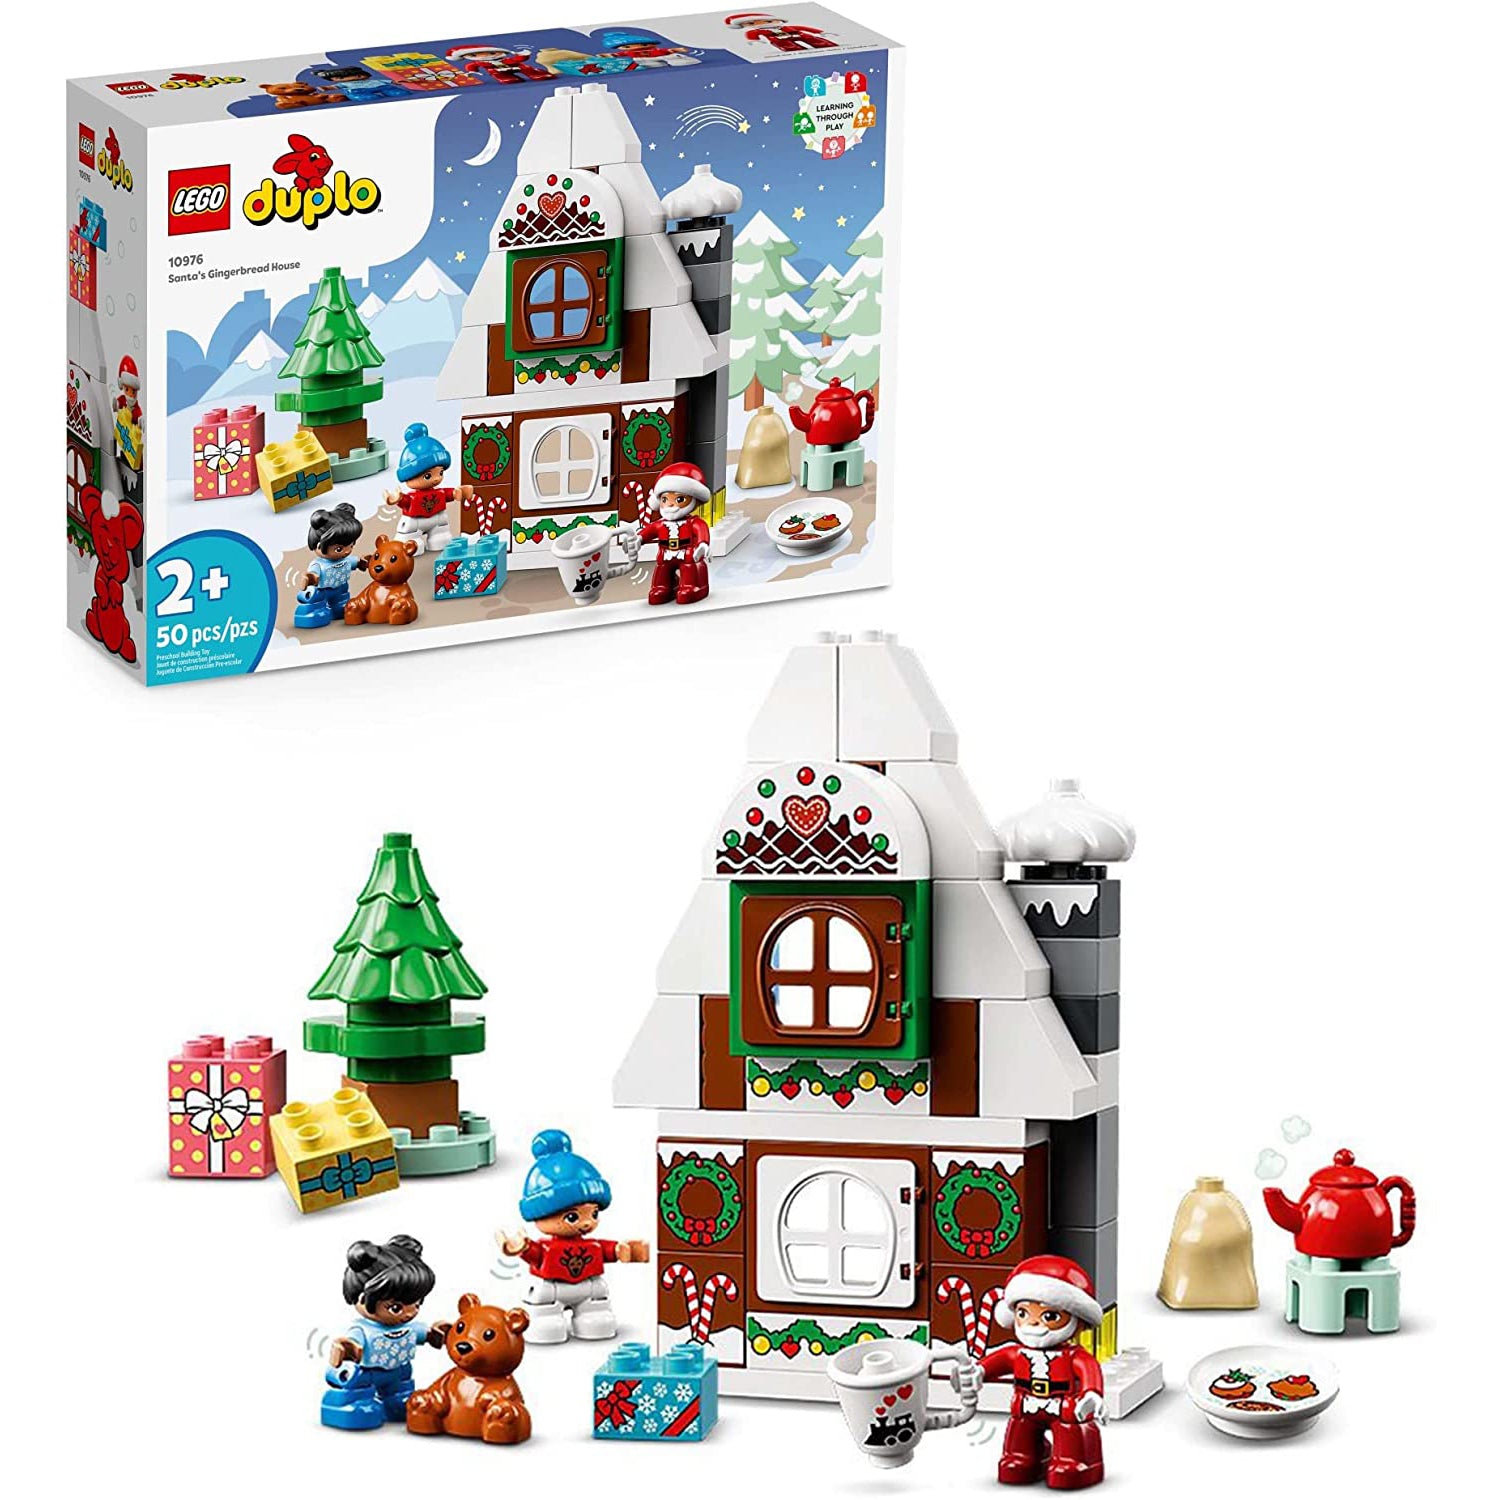 LEGO DUPLO Santa's Gingerbread House [10976 - 50 Pieces]